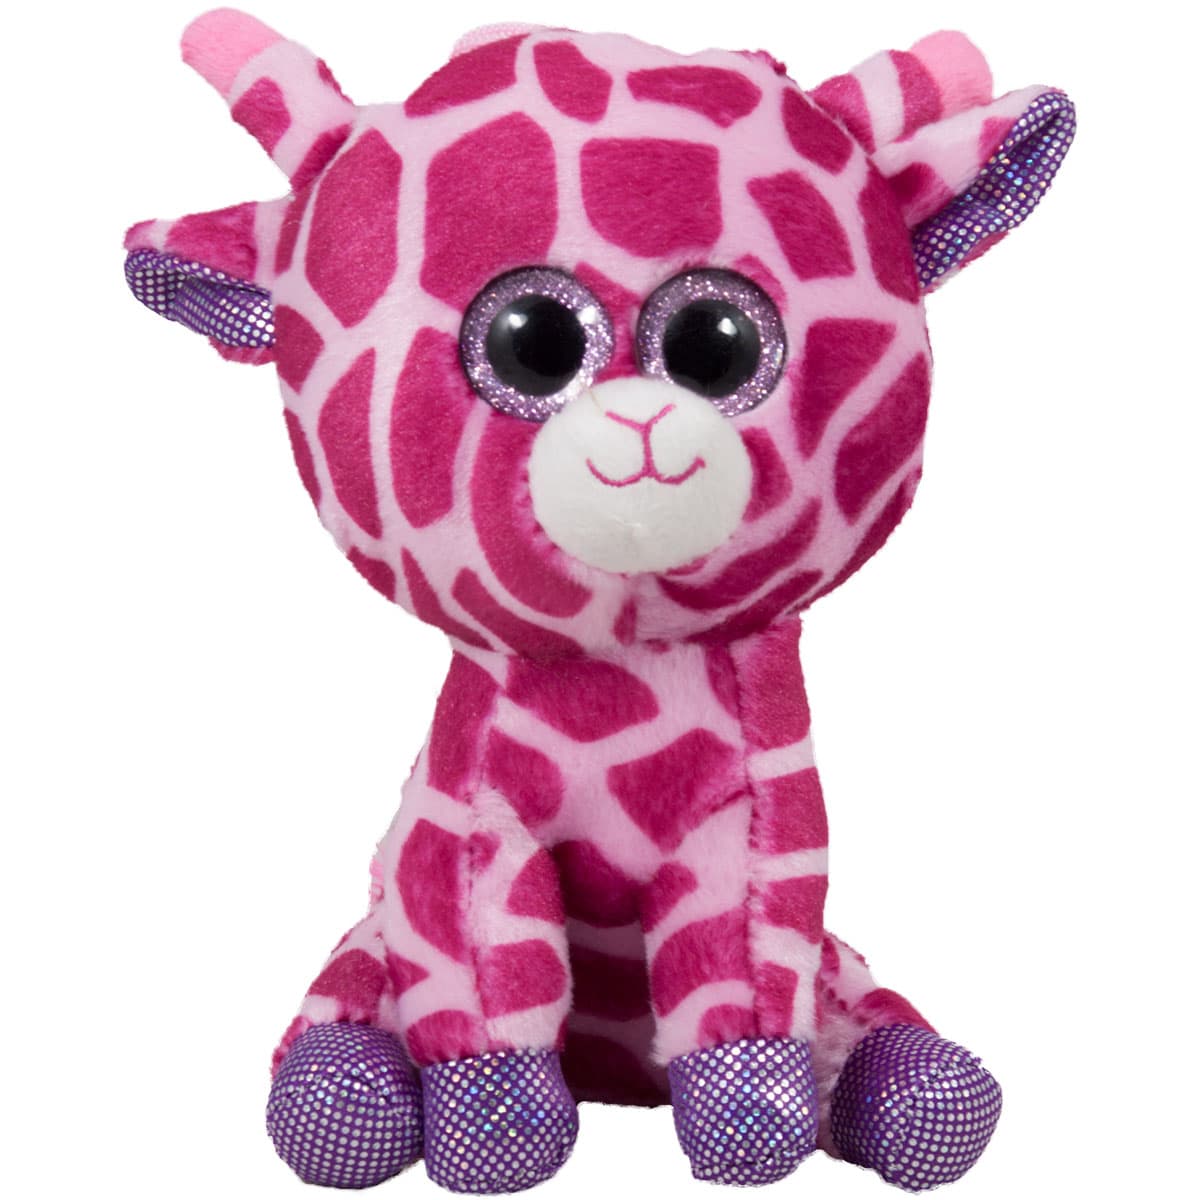 Baby giraffe rattle - Pink